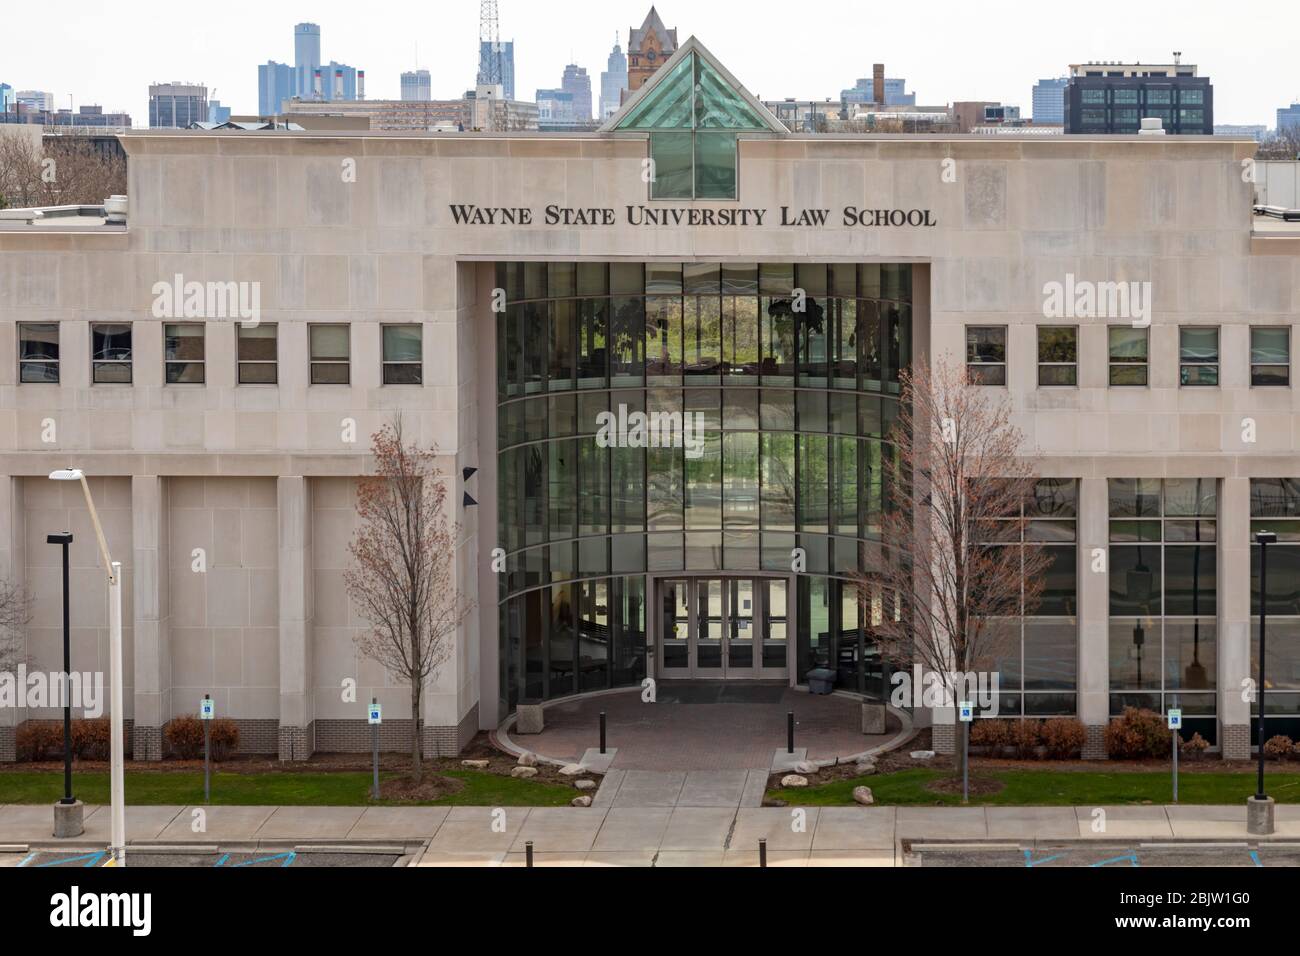 Detroit, Michigan - The Wayne State University Law School. Stock Photo